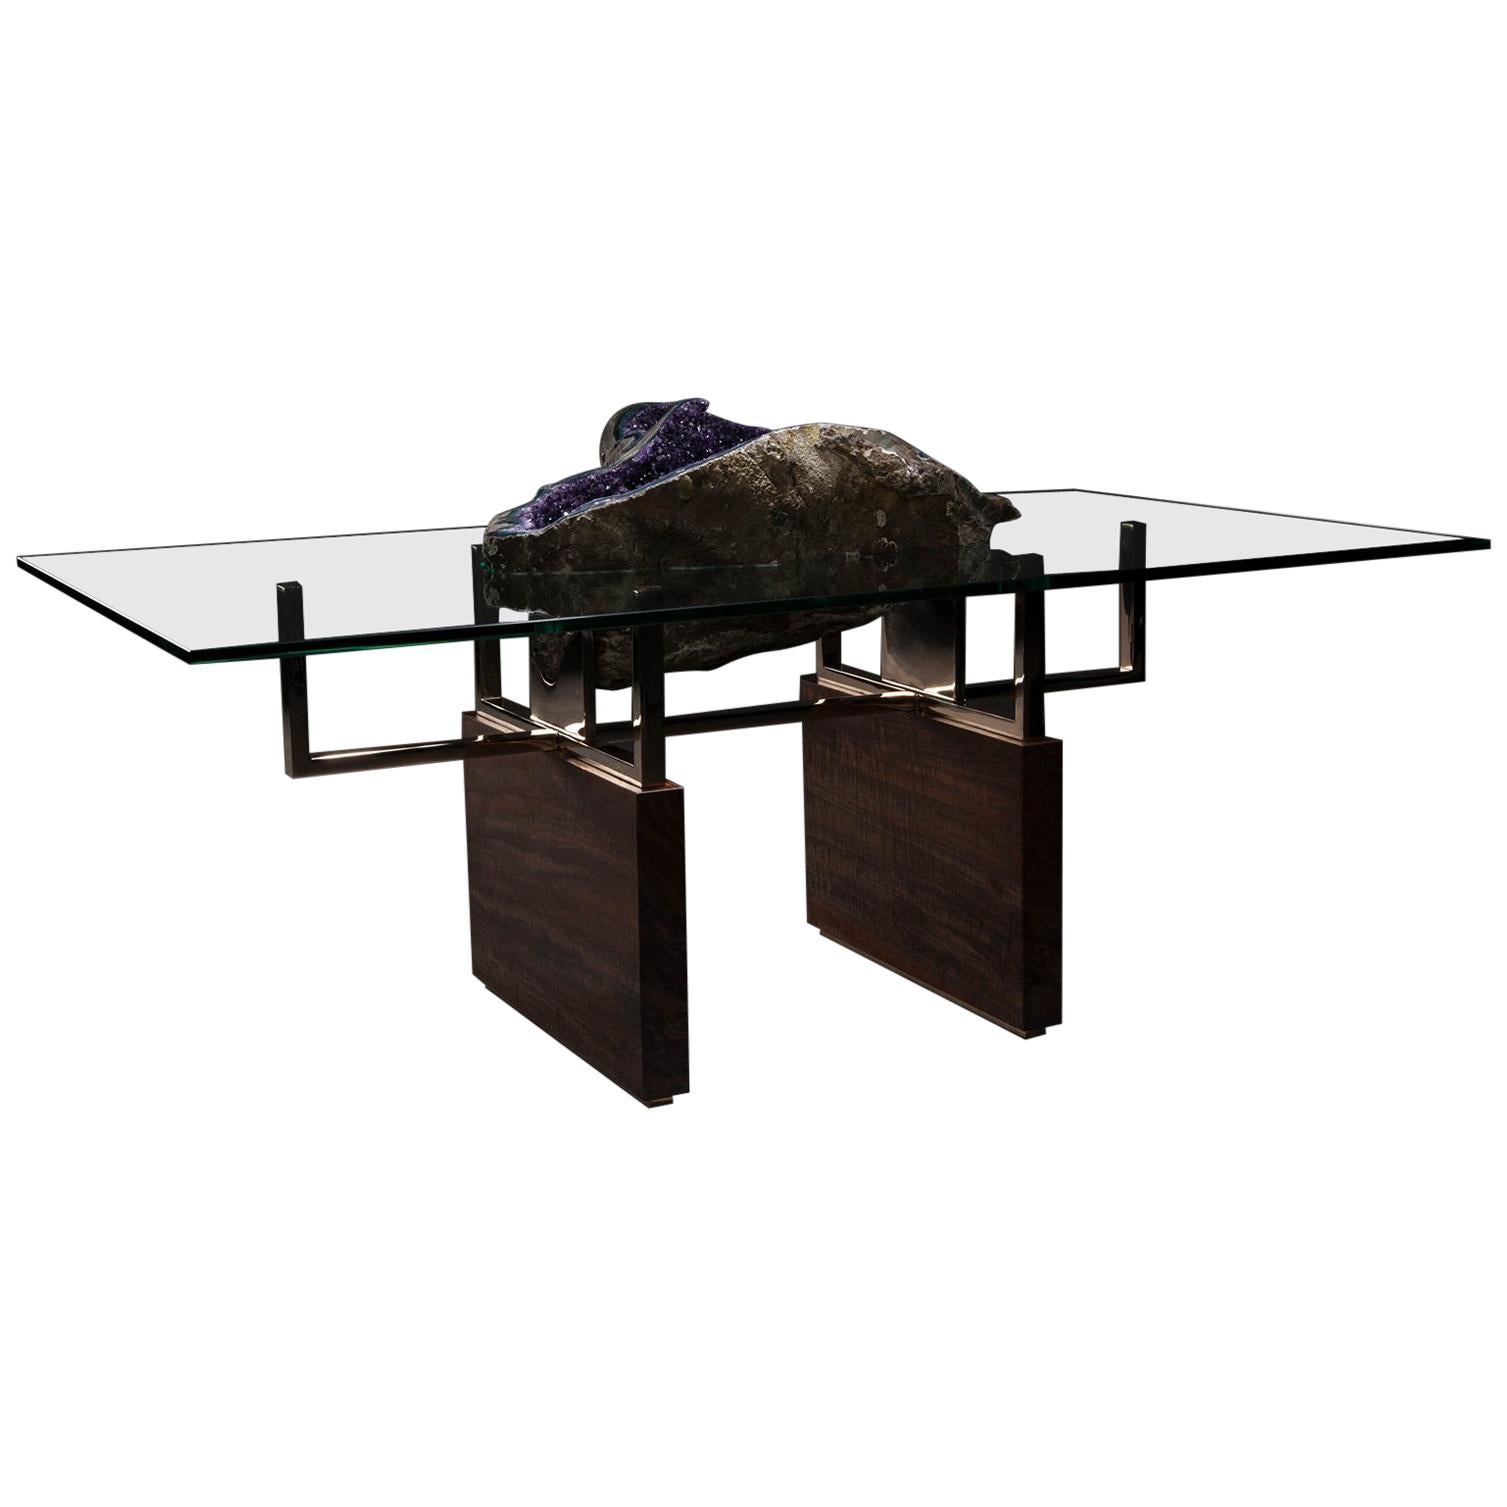 Studio Greytak 'Iceberg Table 1' with Amethyst, Polished Bronze, and Burl Walnut For Sale